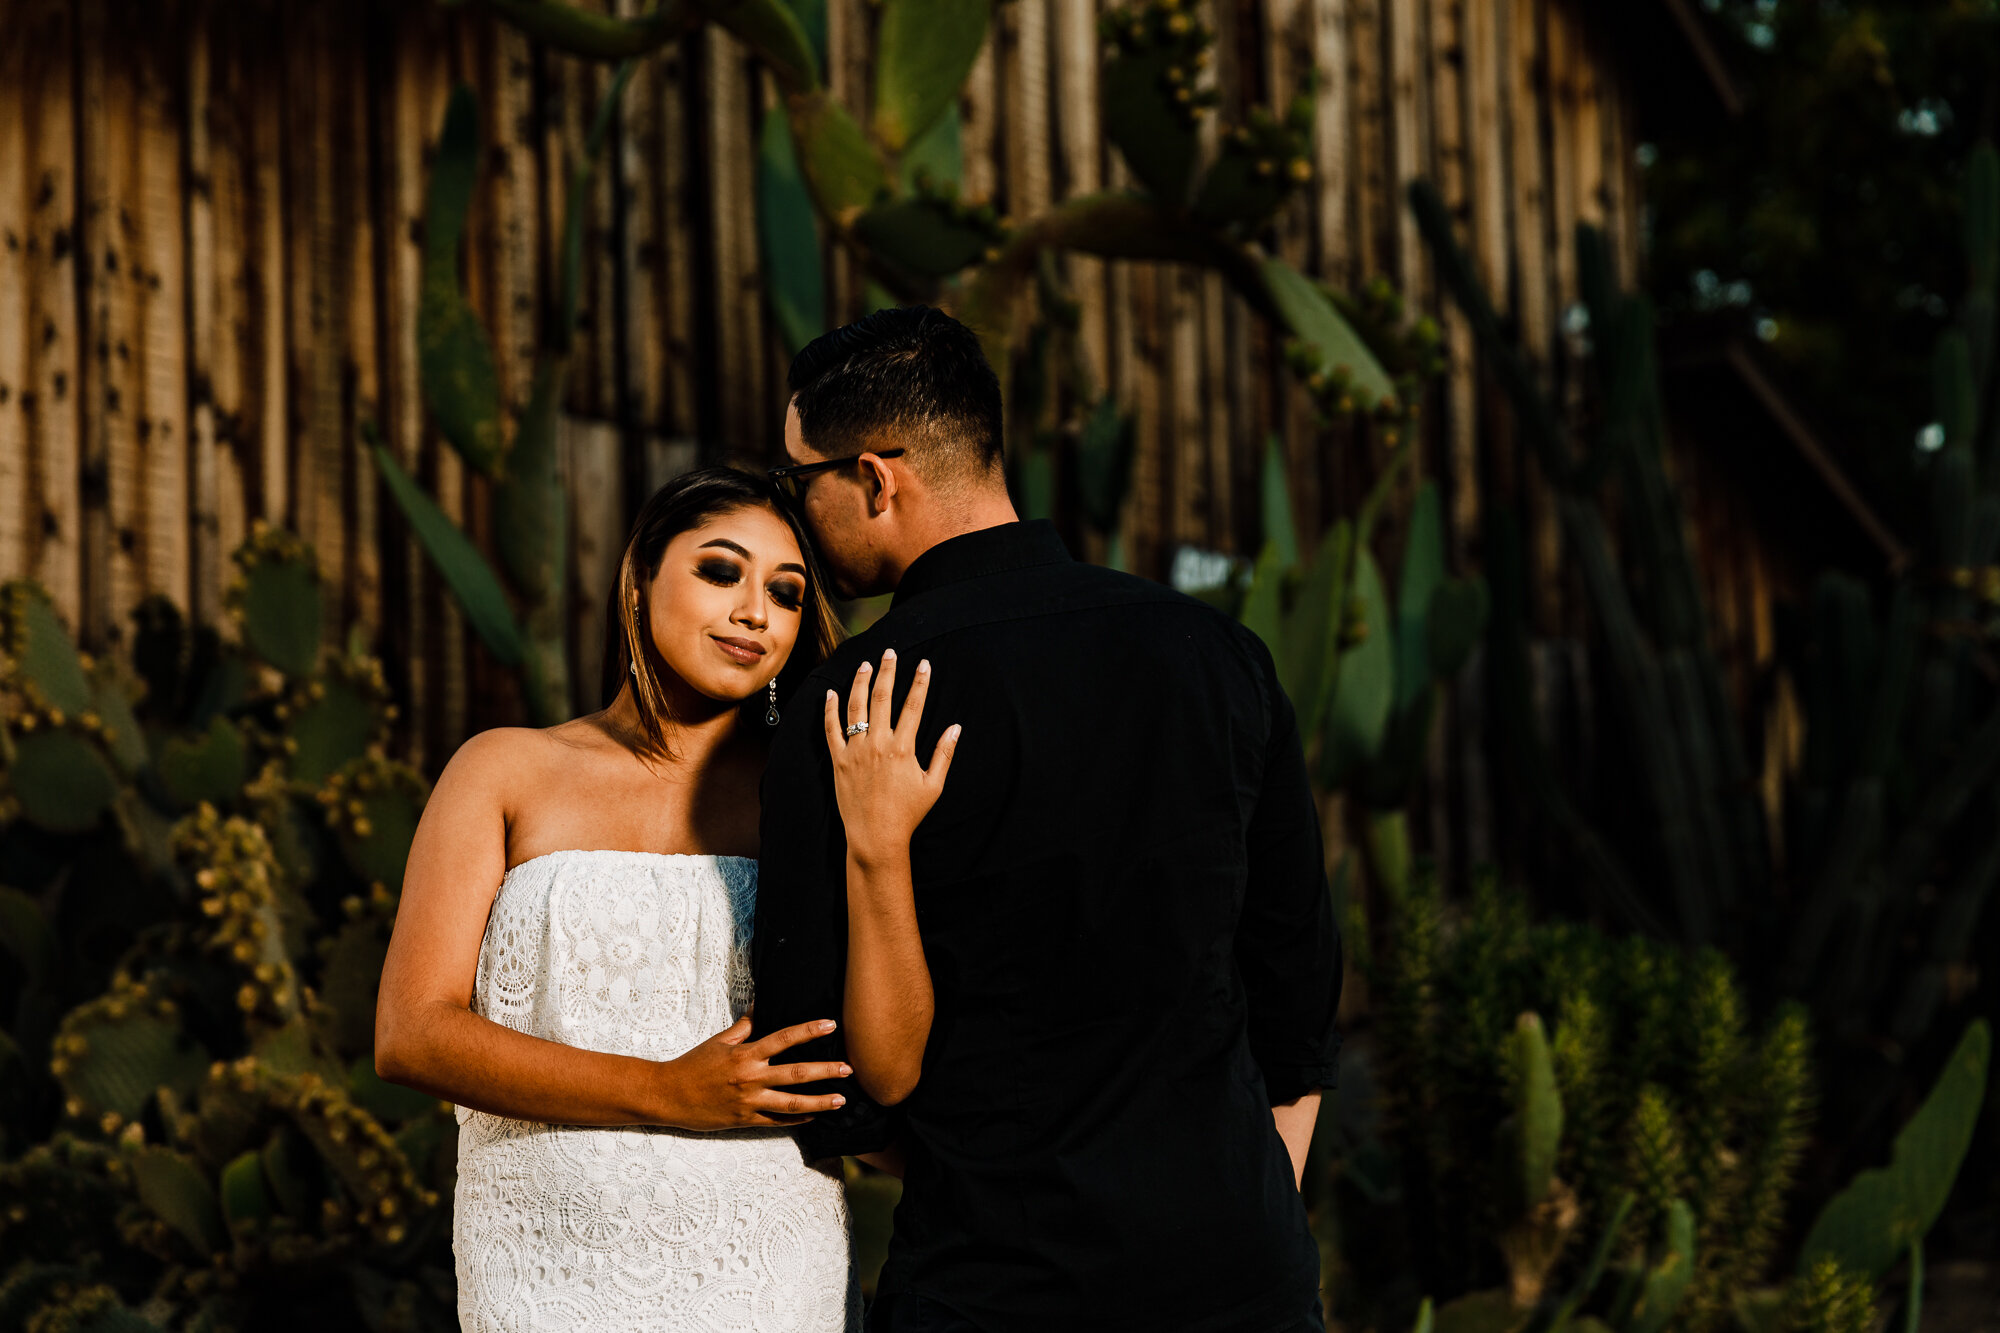 Best Wedding Photographer San Diego - Romantic Couples Portraits at Camp Pendleton Marine Base.jpg